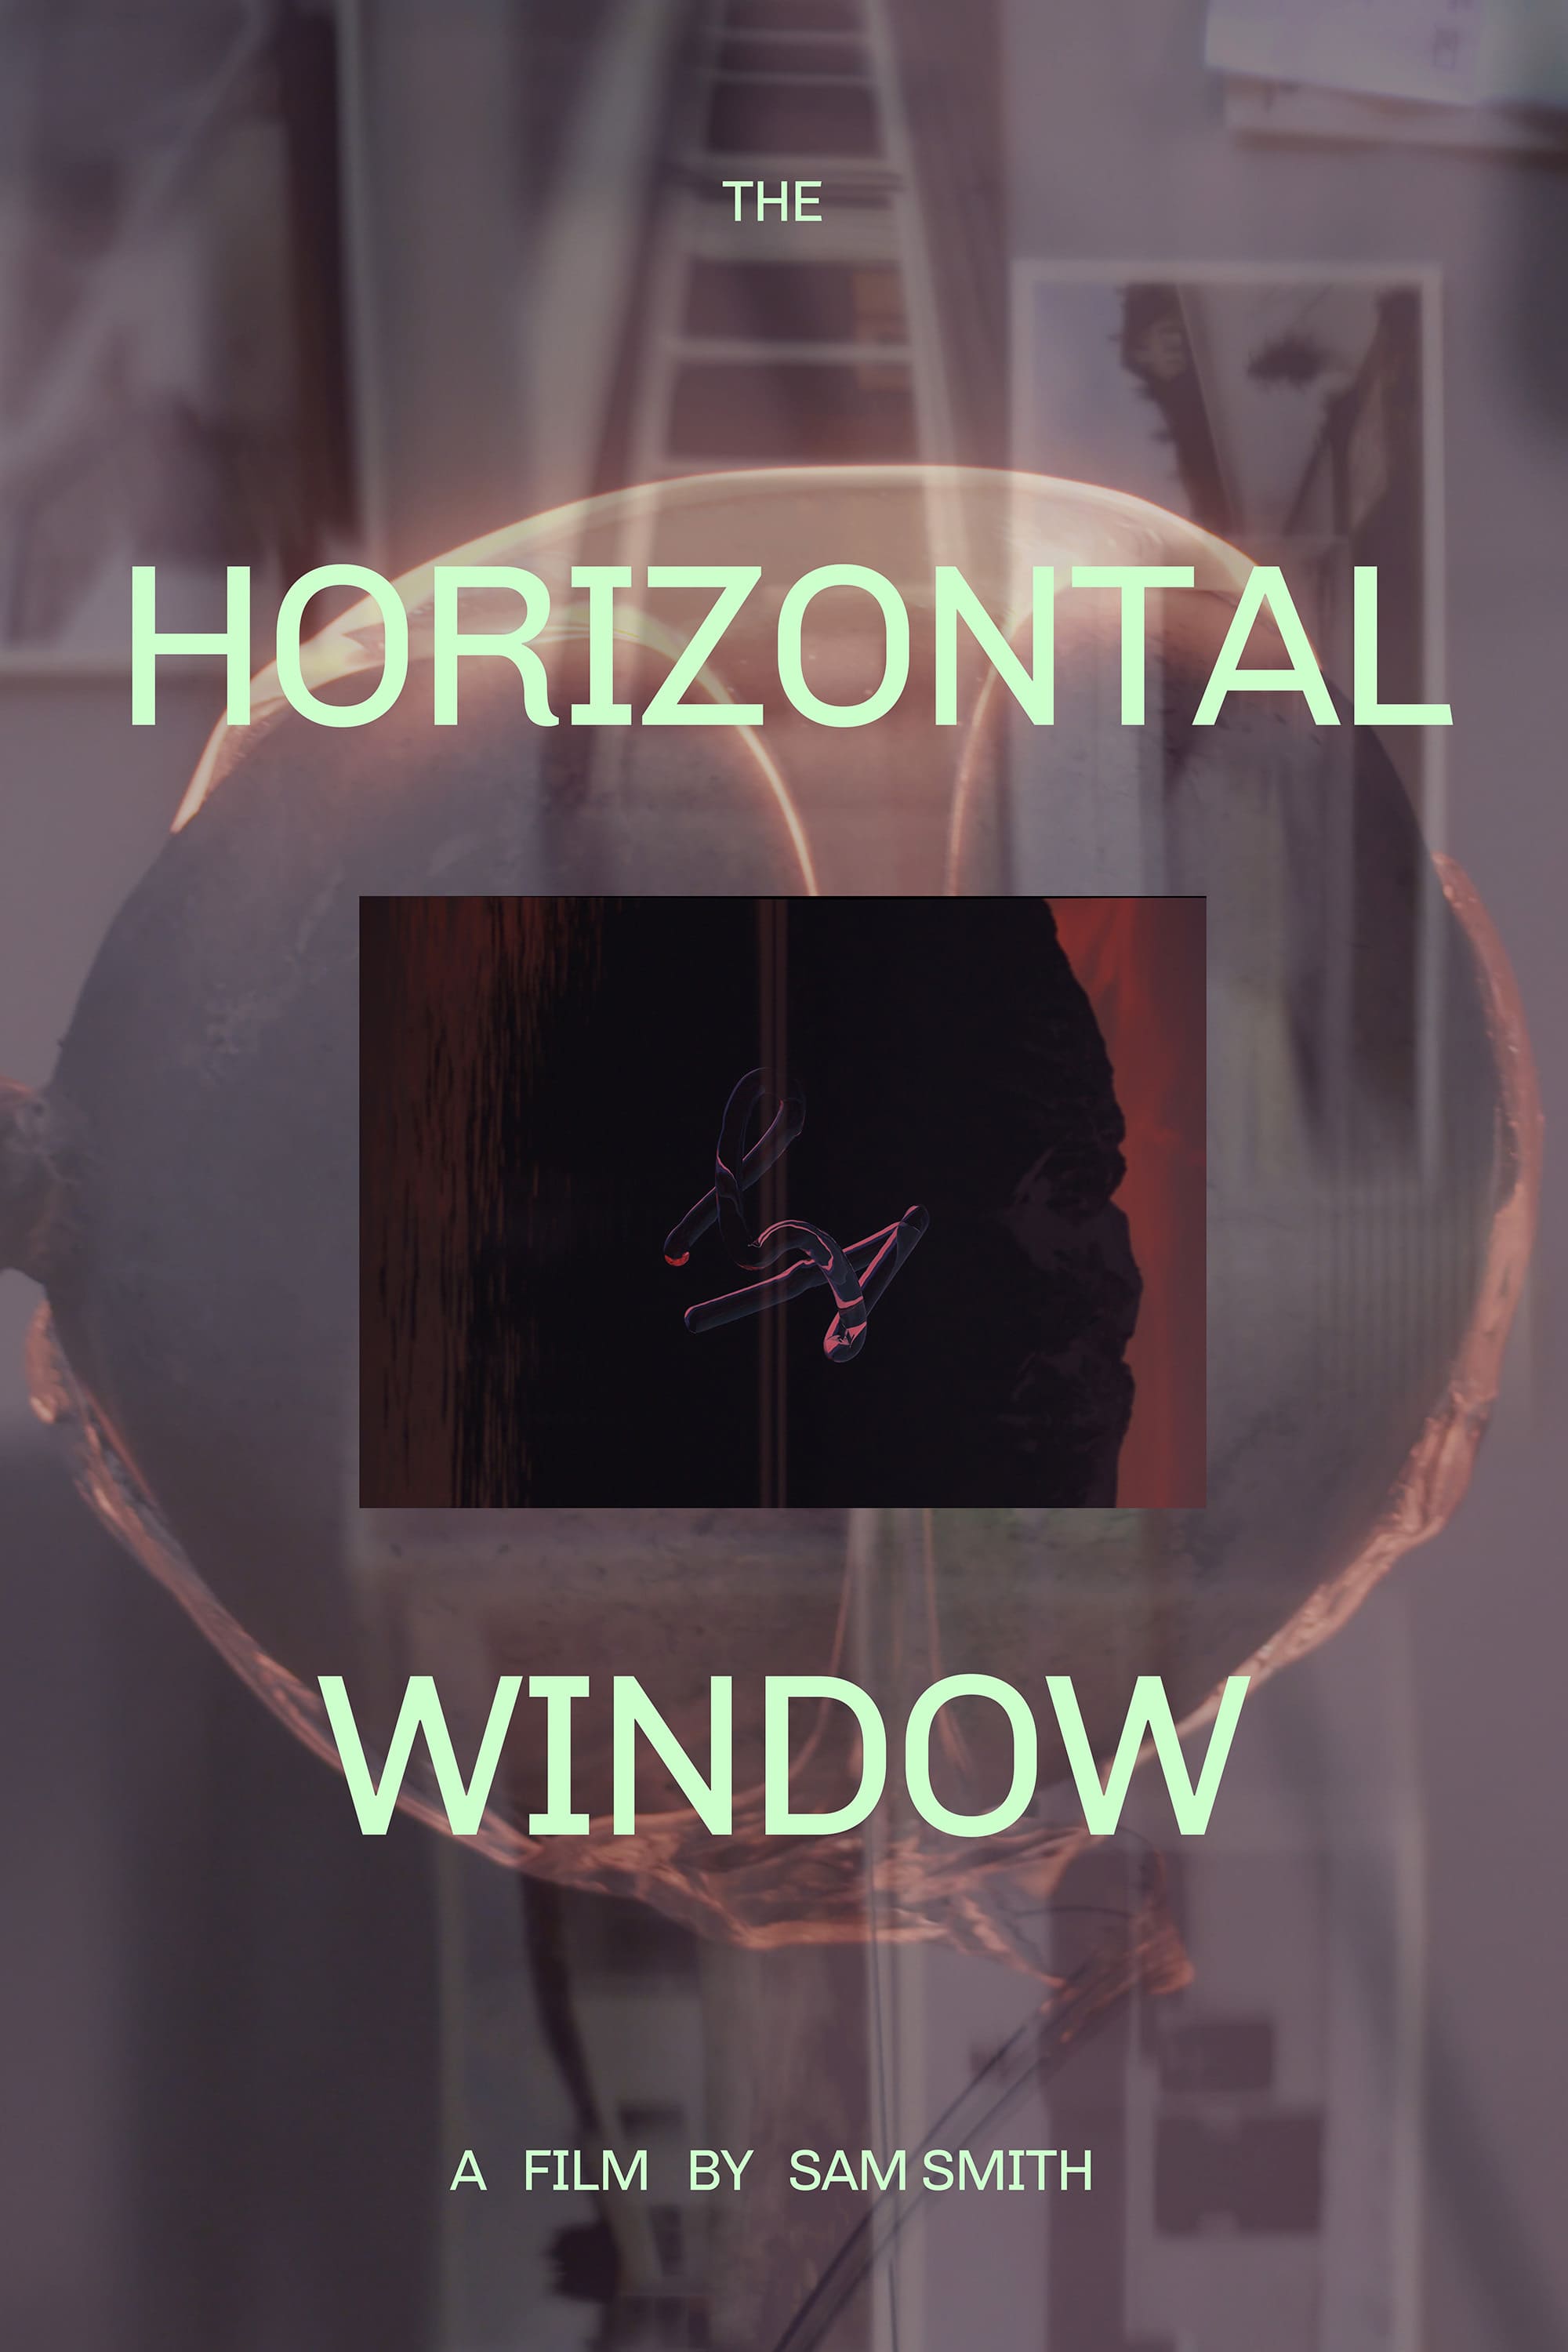 The Horizontal Window